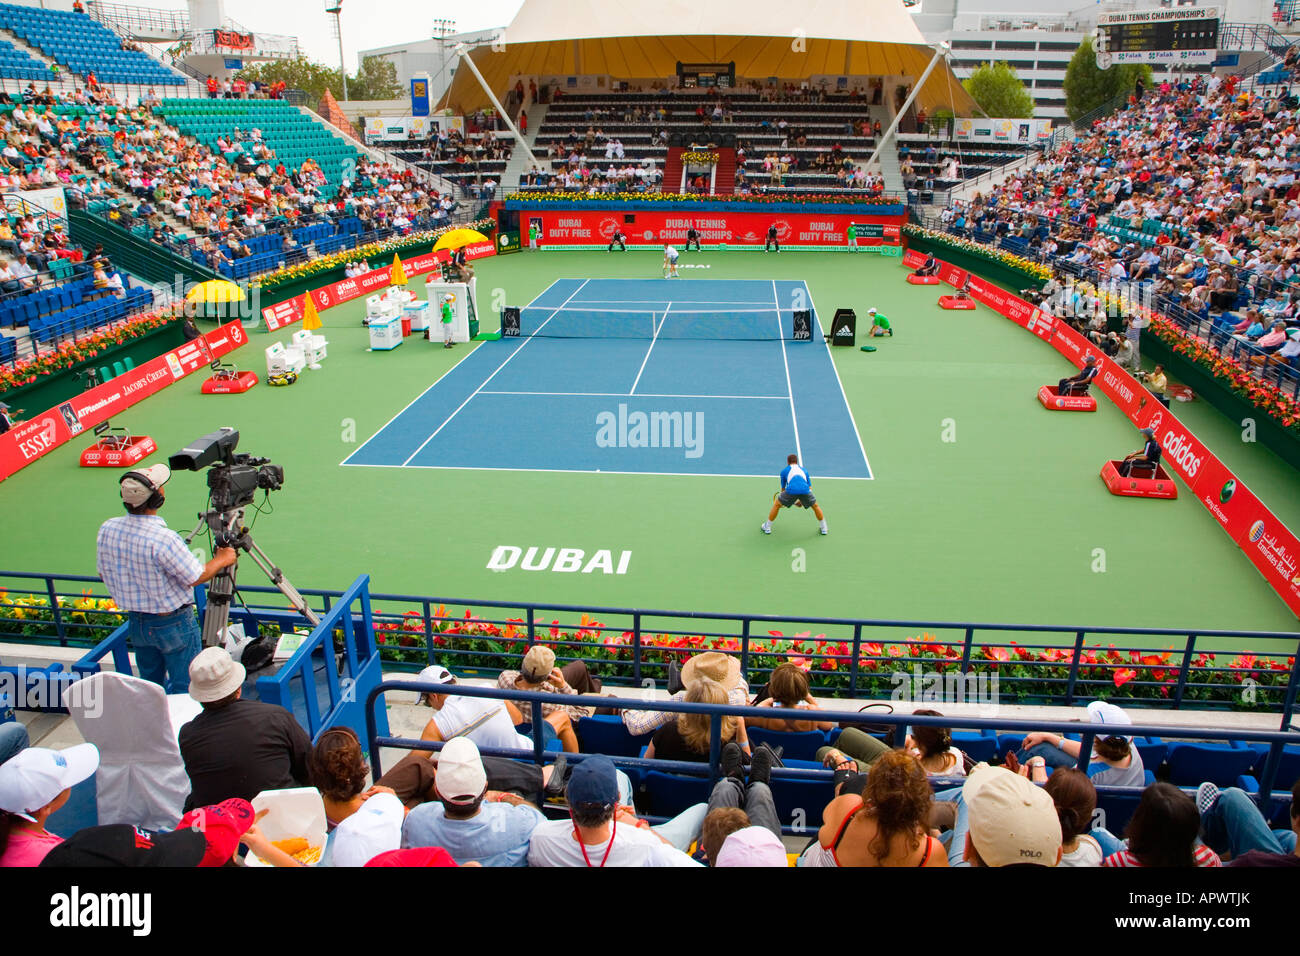 Dubai Tennis Stadium during the ATP tennis tournament 2007 Stock Photo -  Alamy